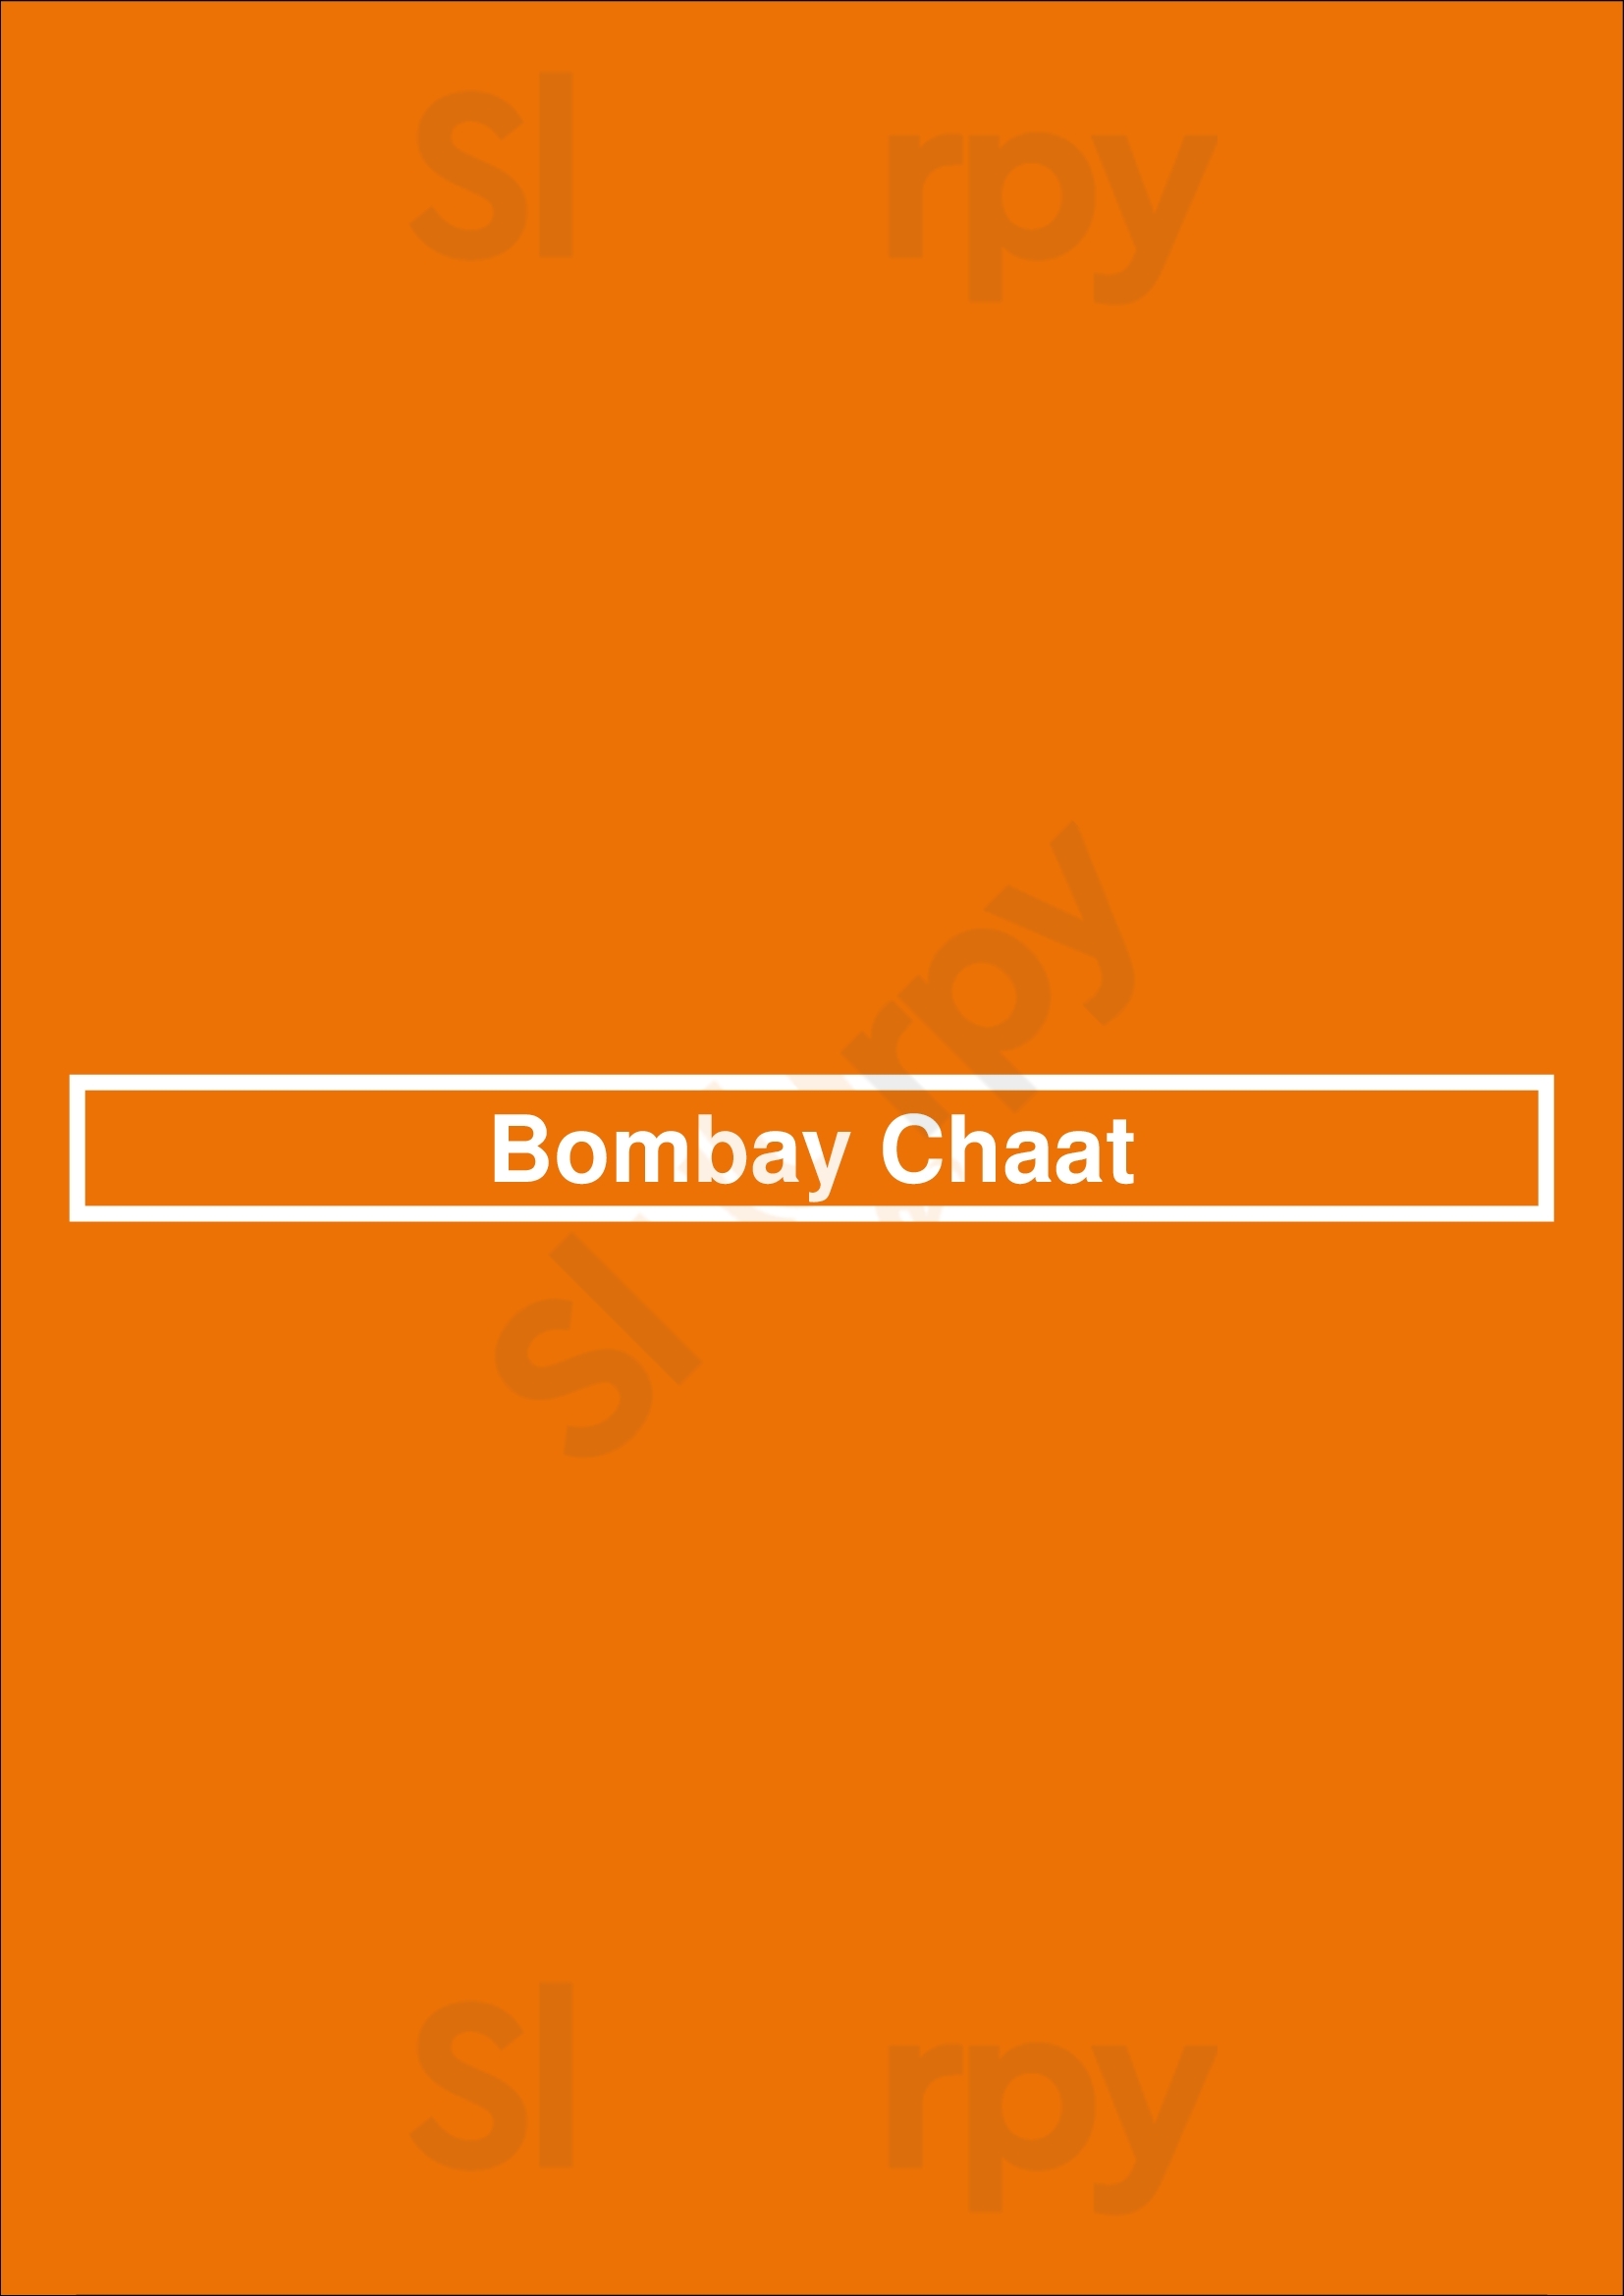 Bombay Chaat Mississauga Menu - 1